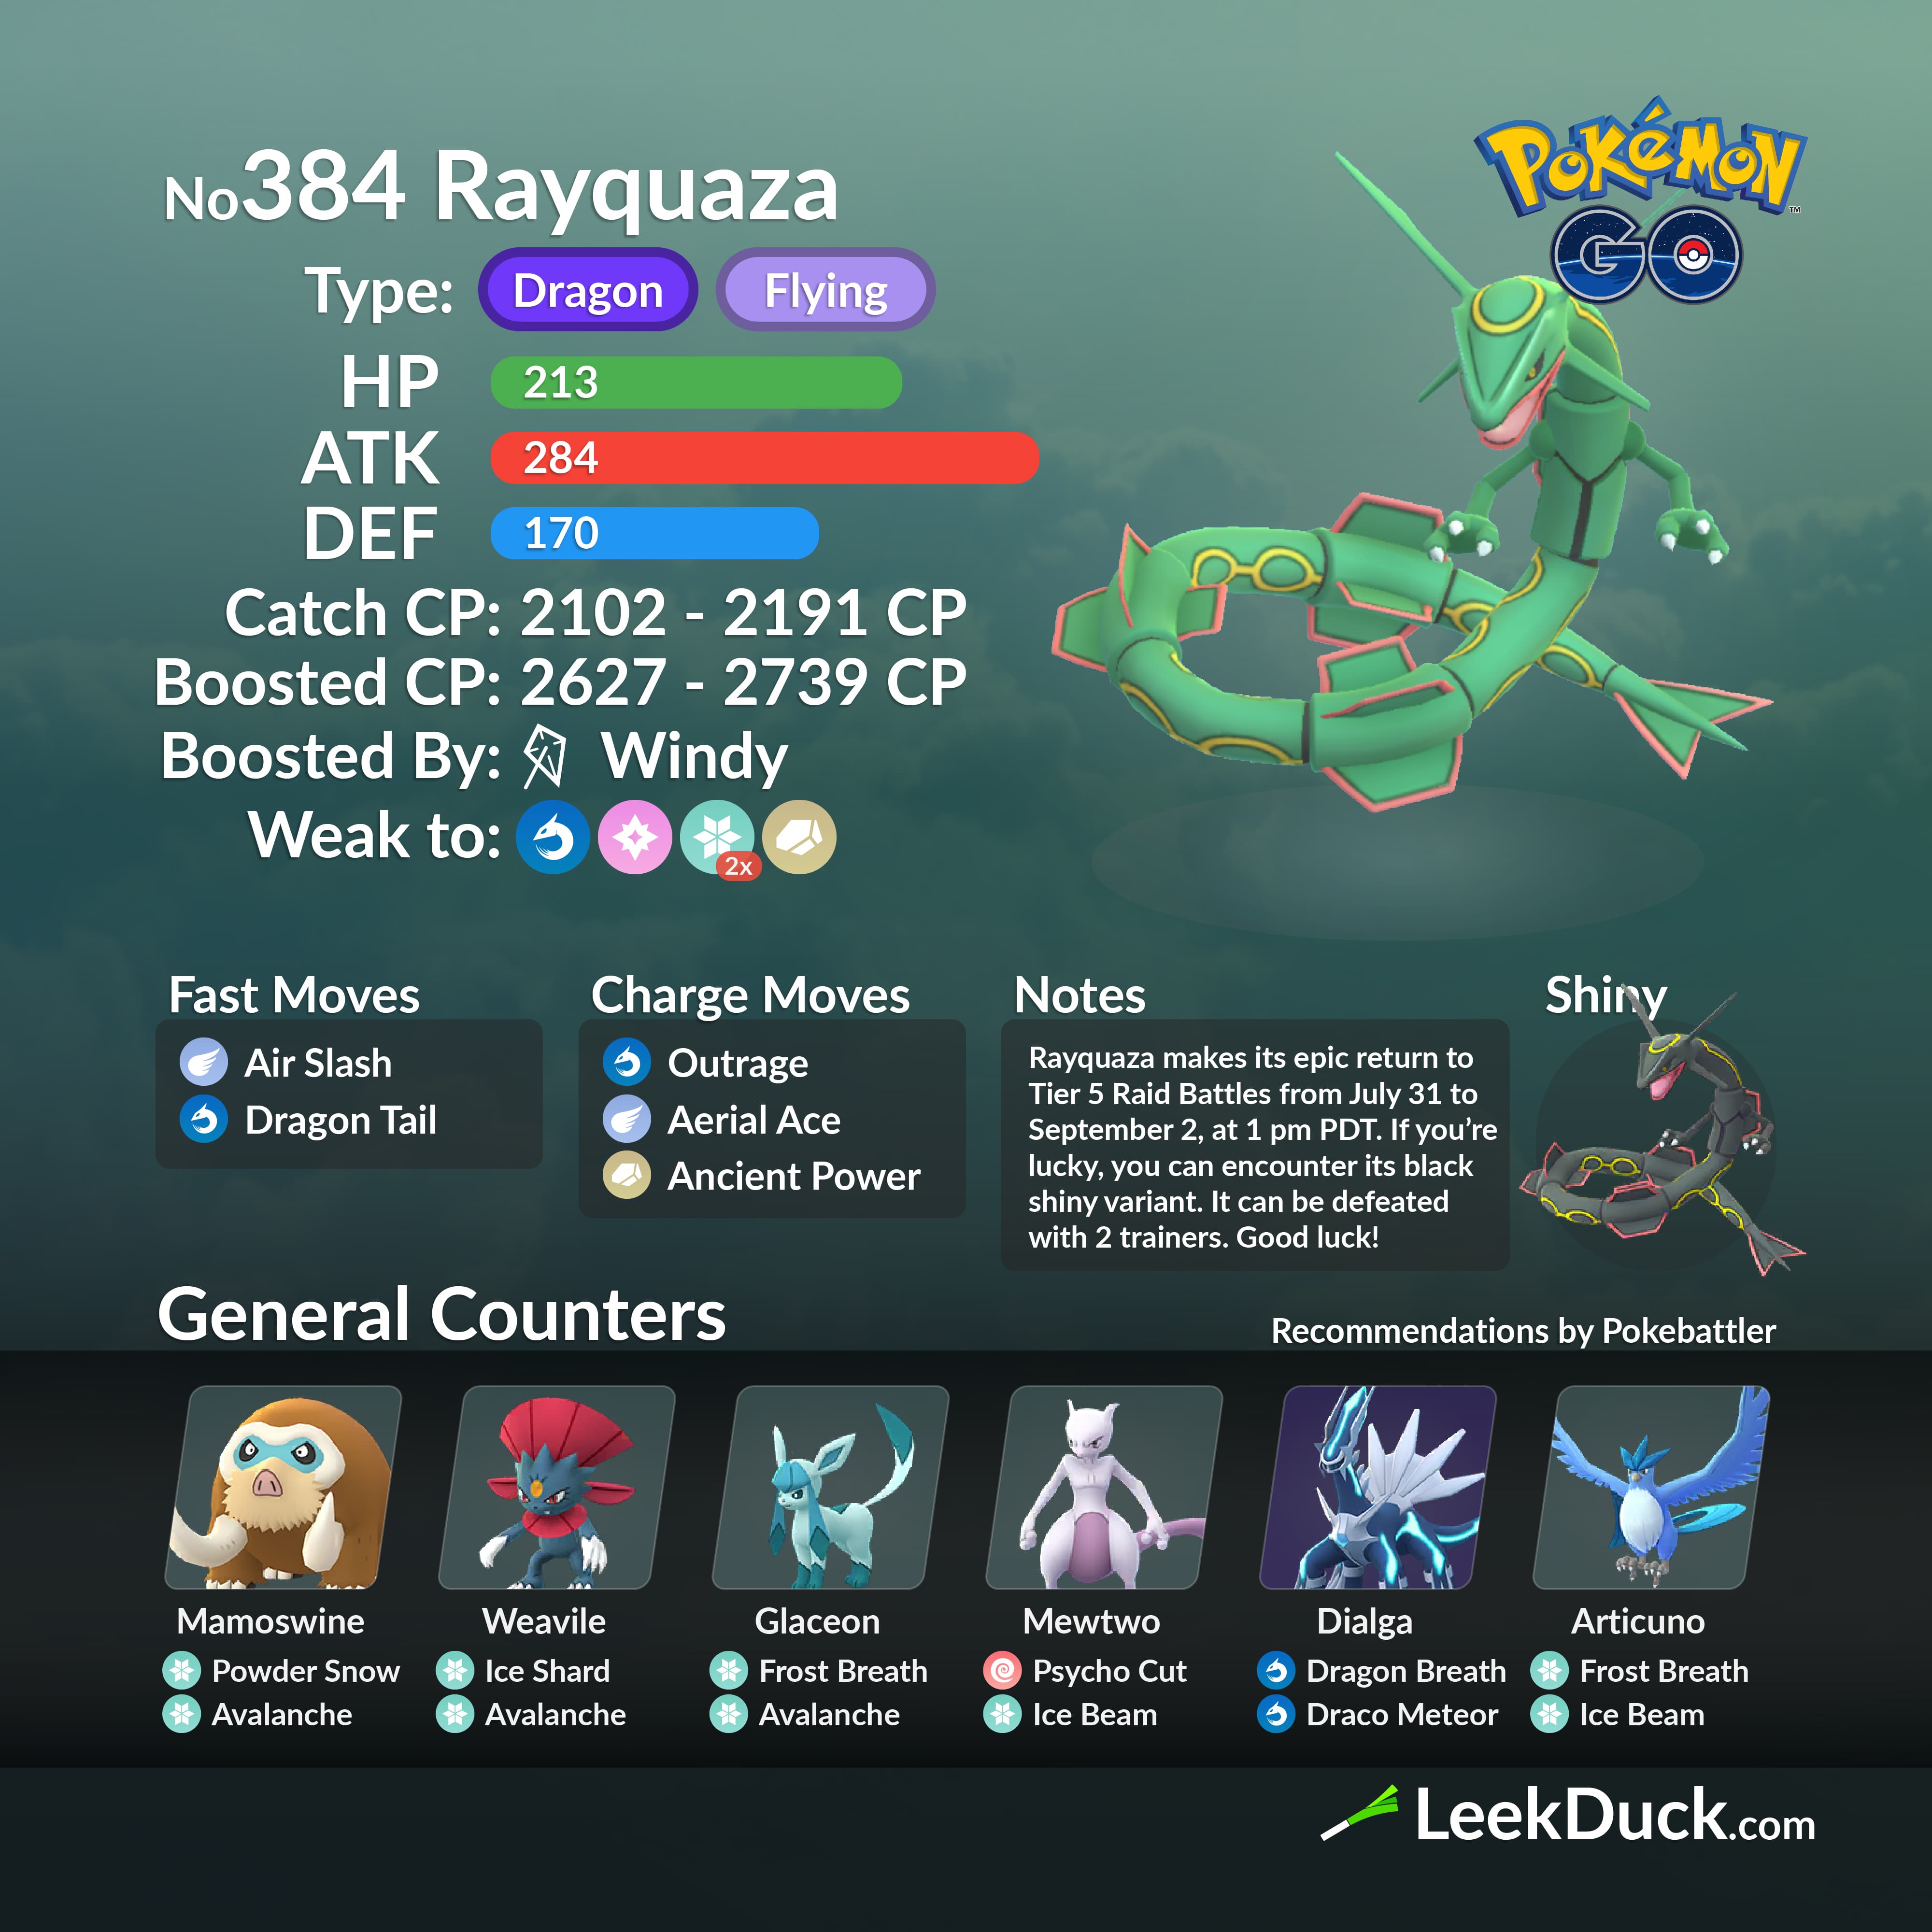 Legendary Raid Hour - Leek Duck | Pokémon GO News and Resources